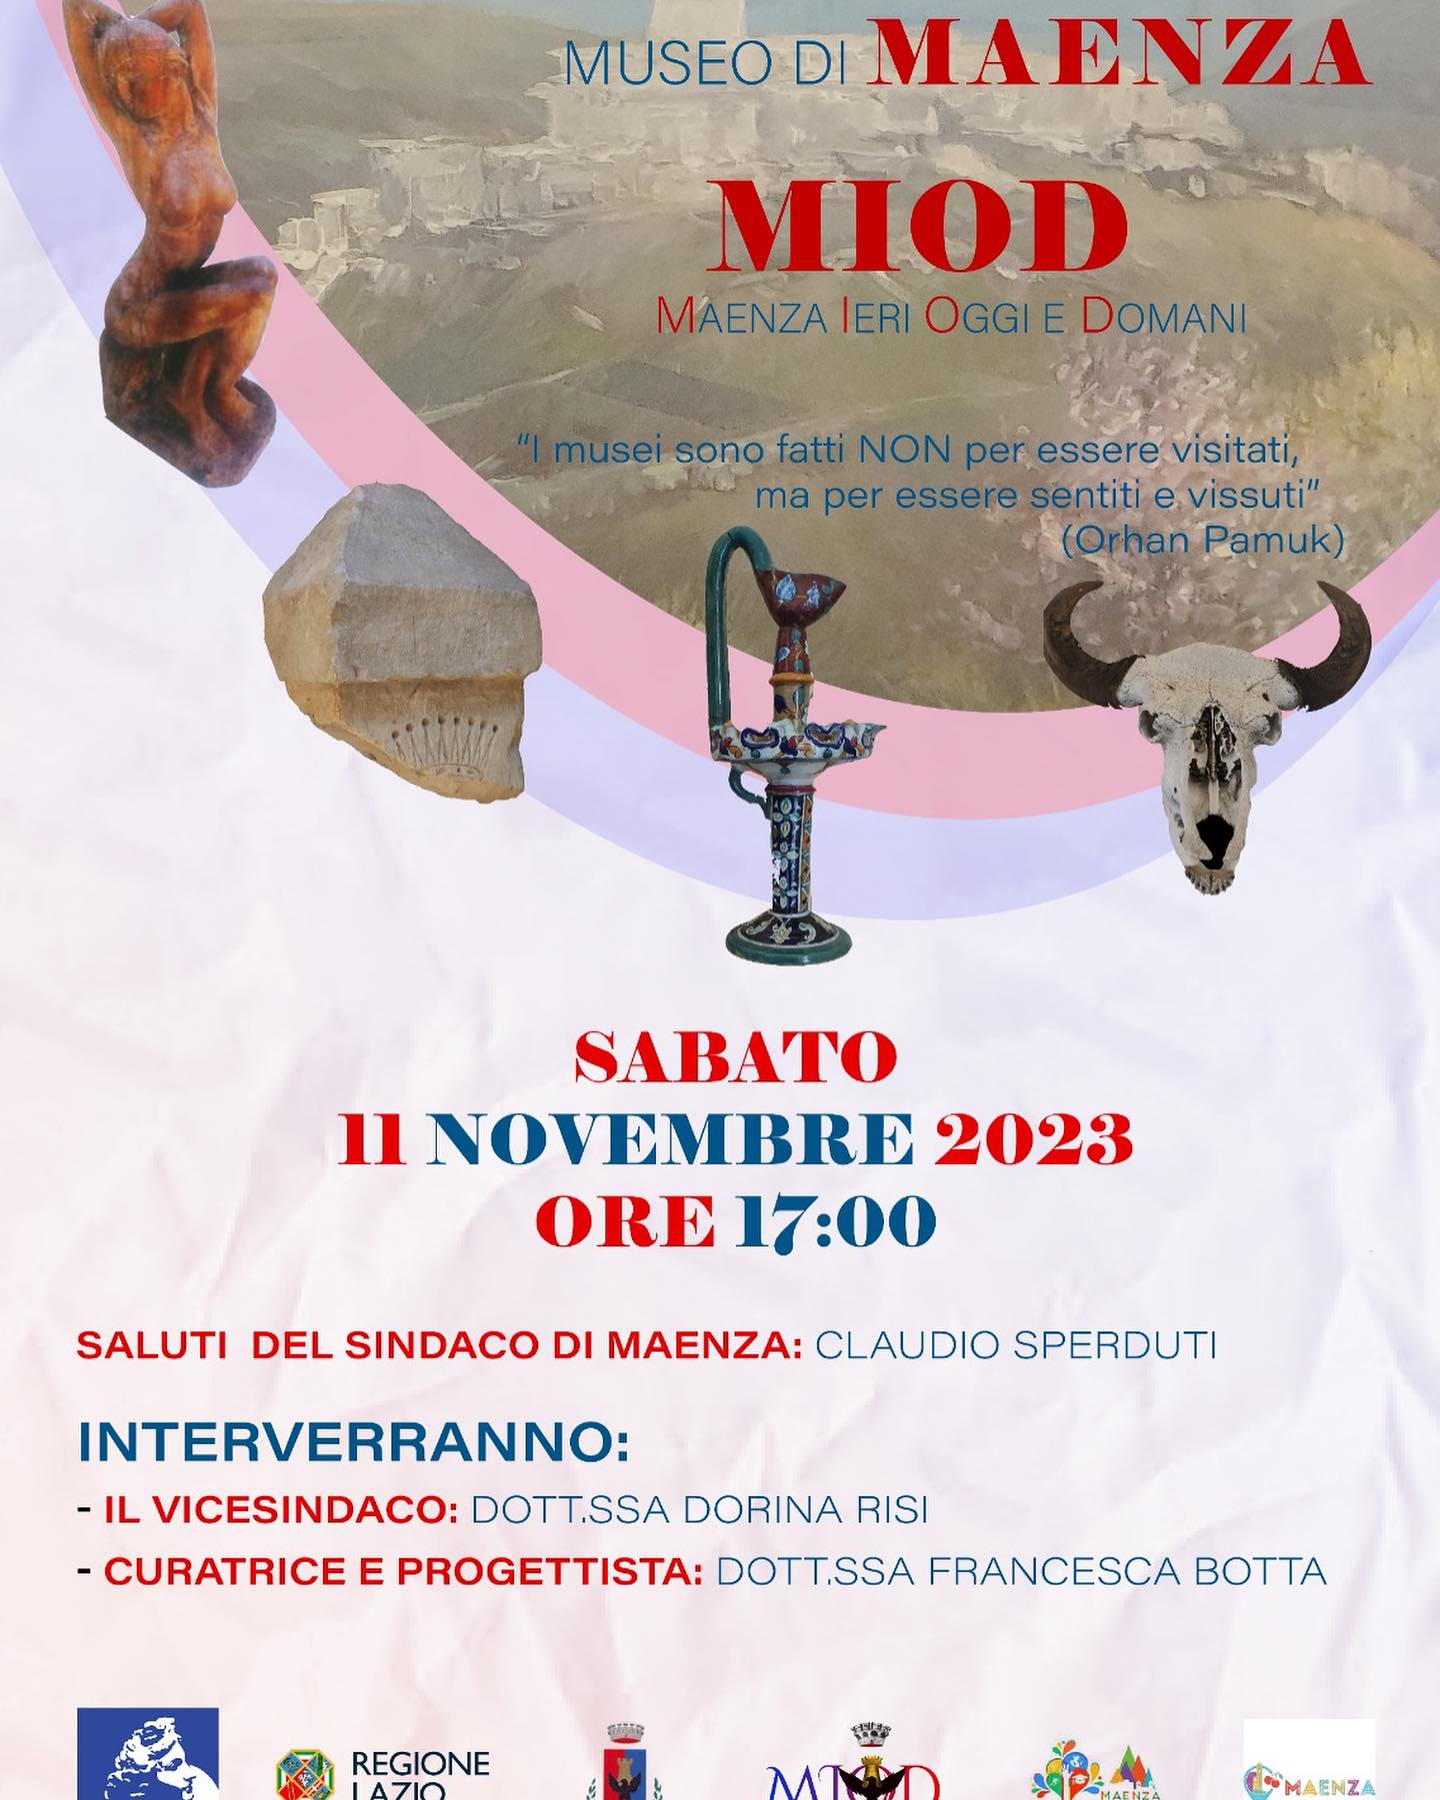 maenza-museo-miod-11-novembre